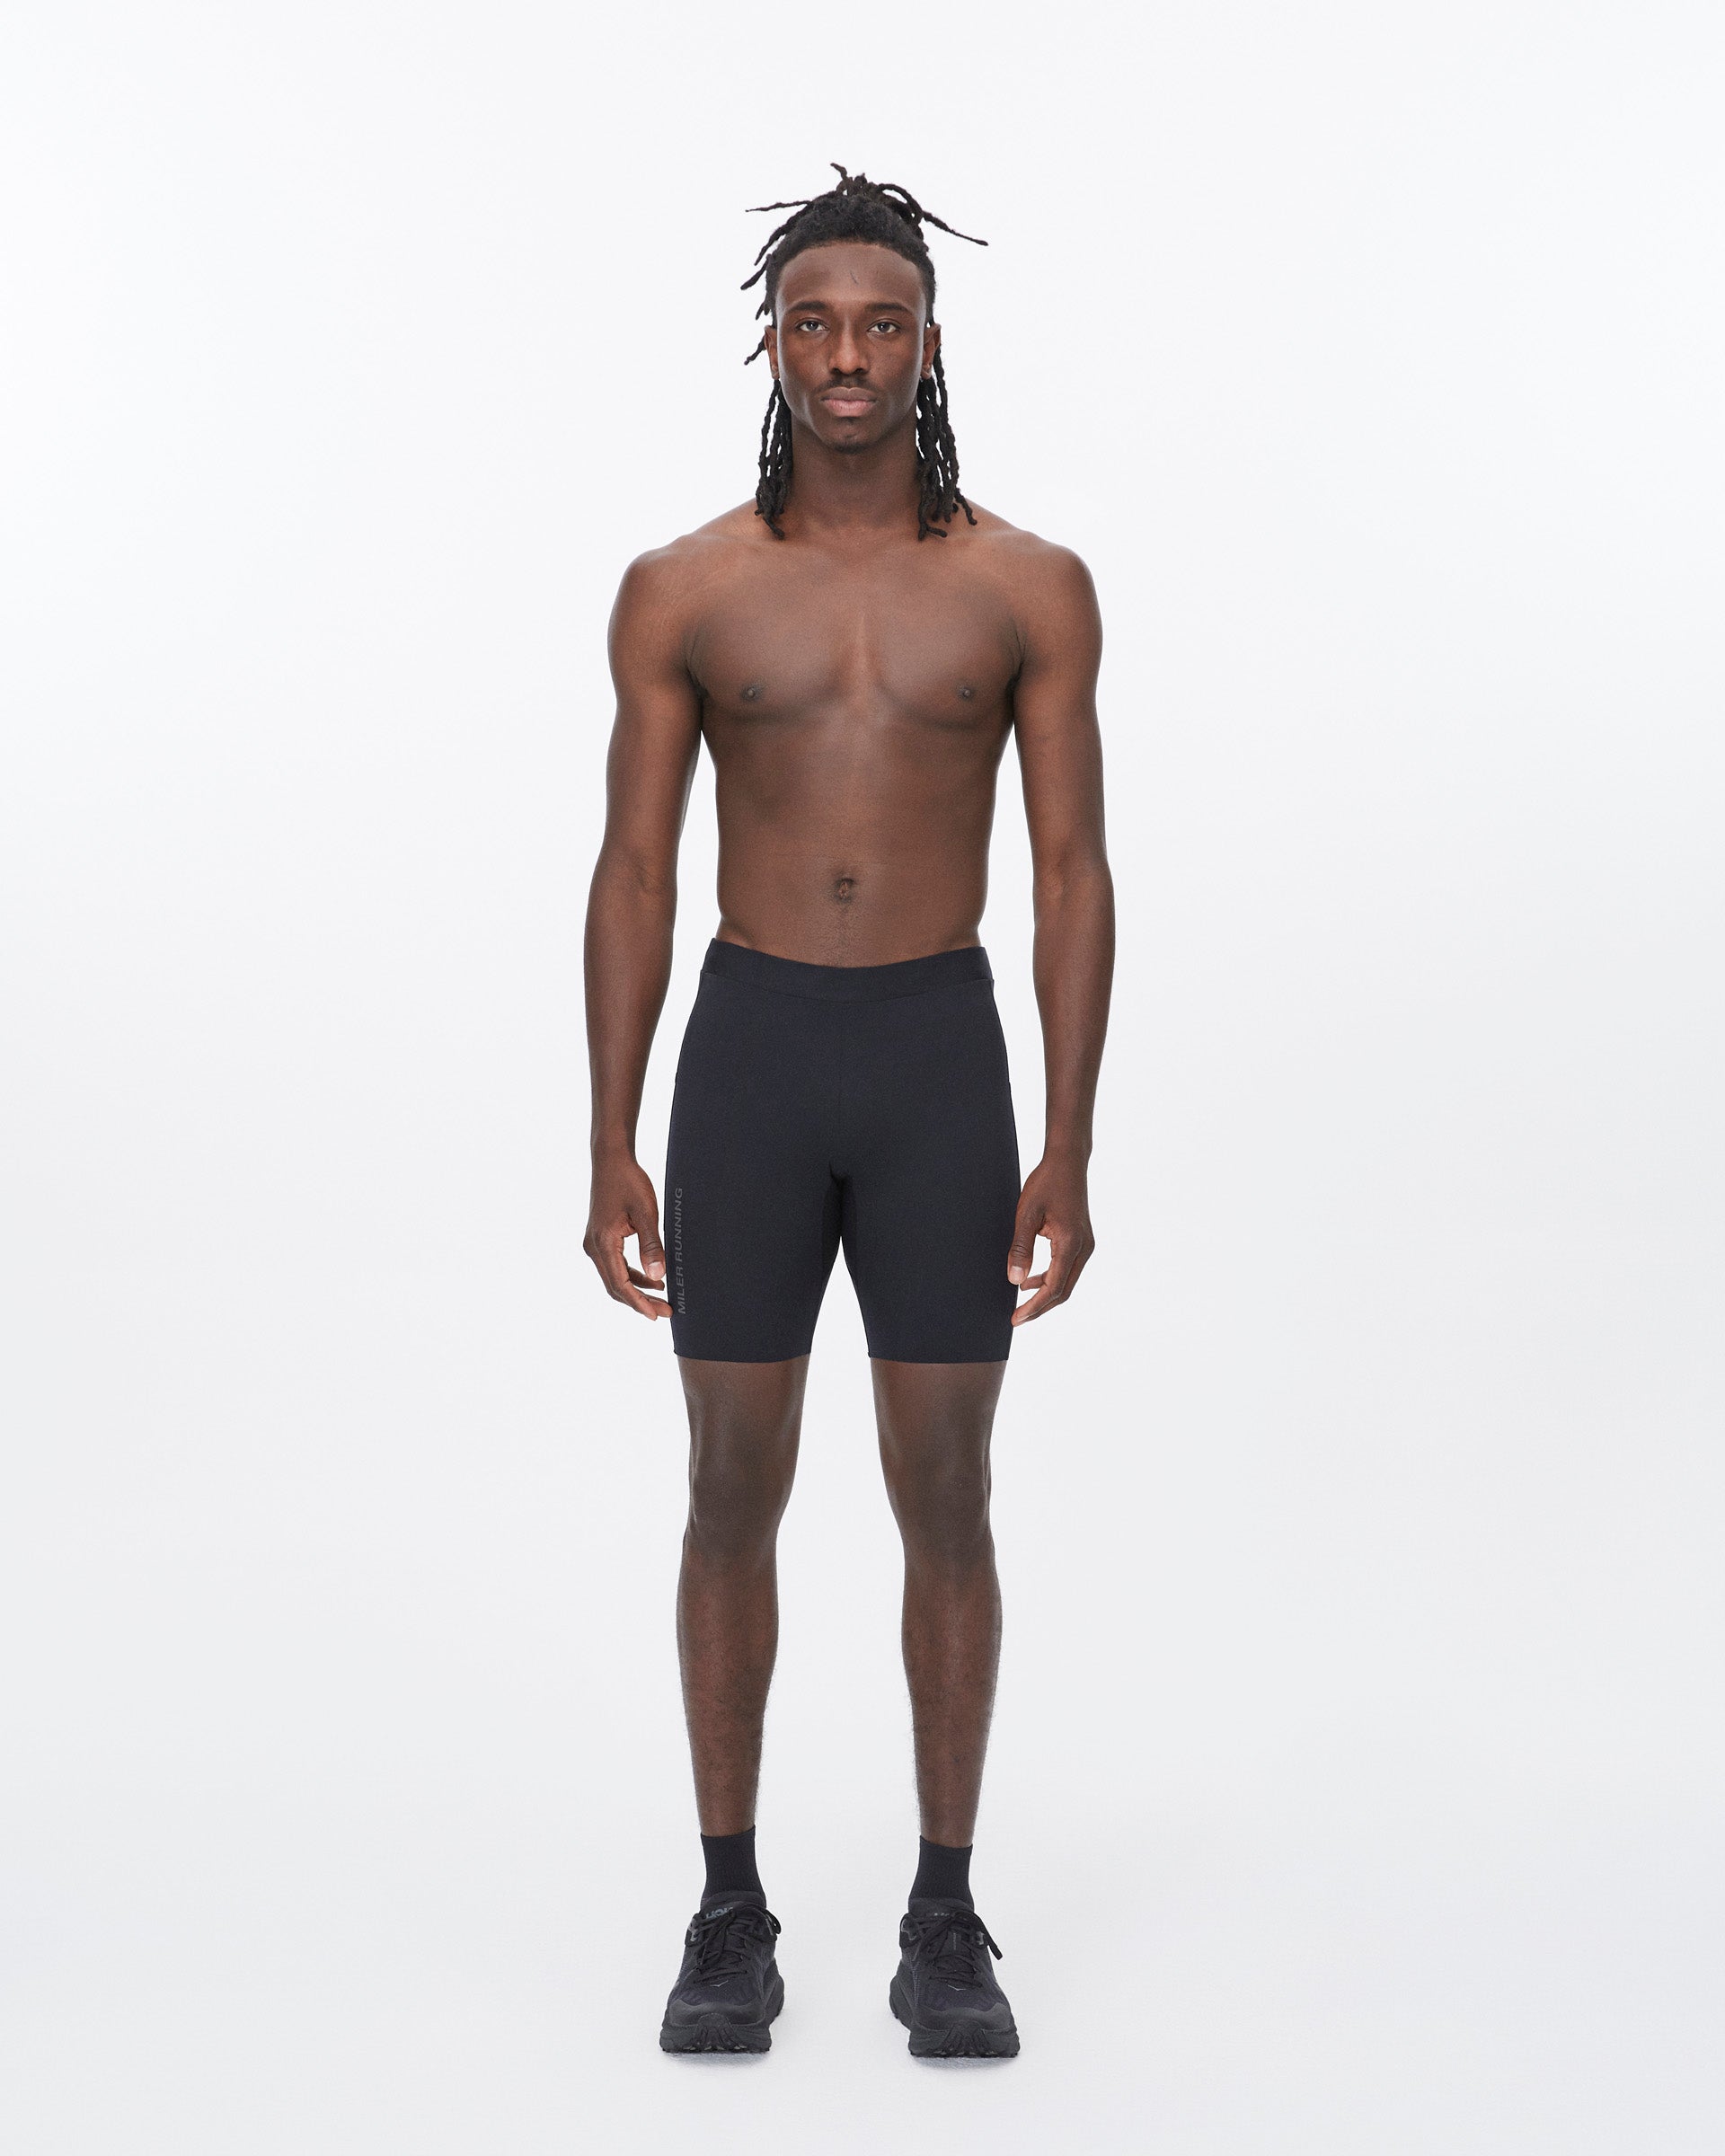 Nylon Compression Shorts and Half Tights For Men (Black